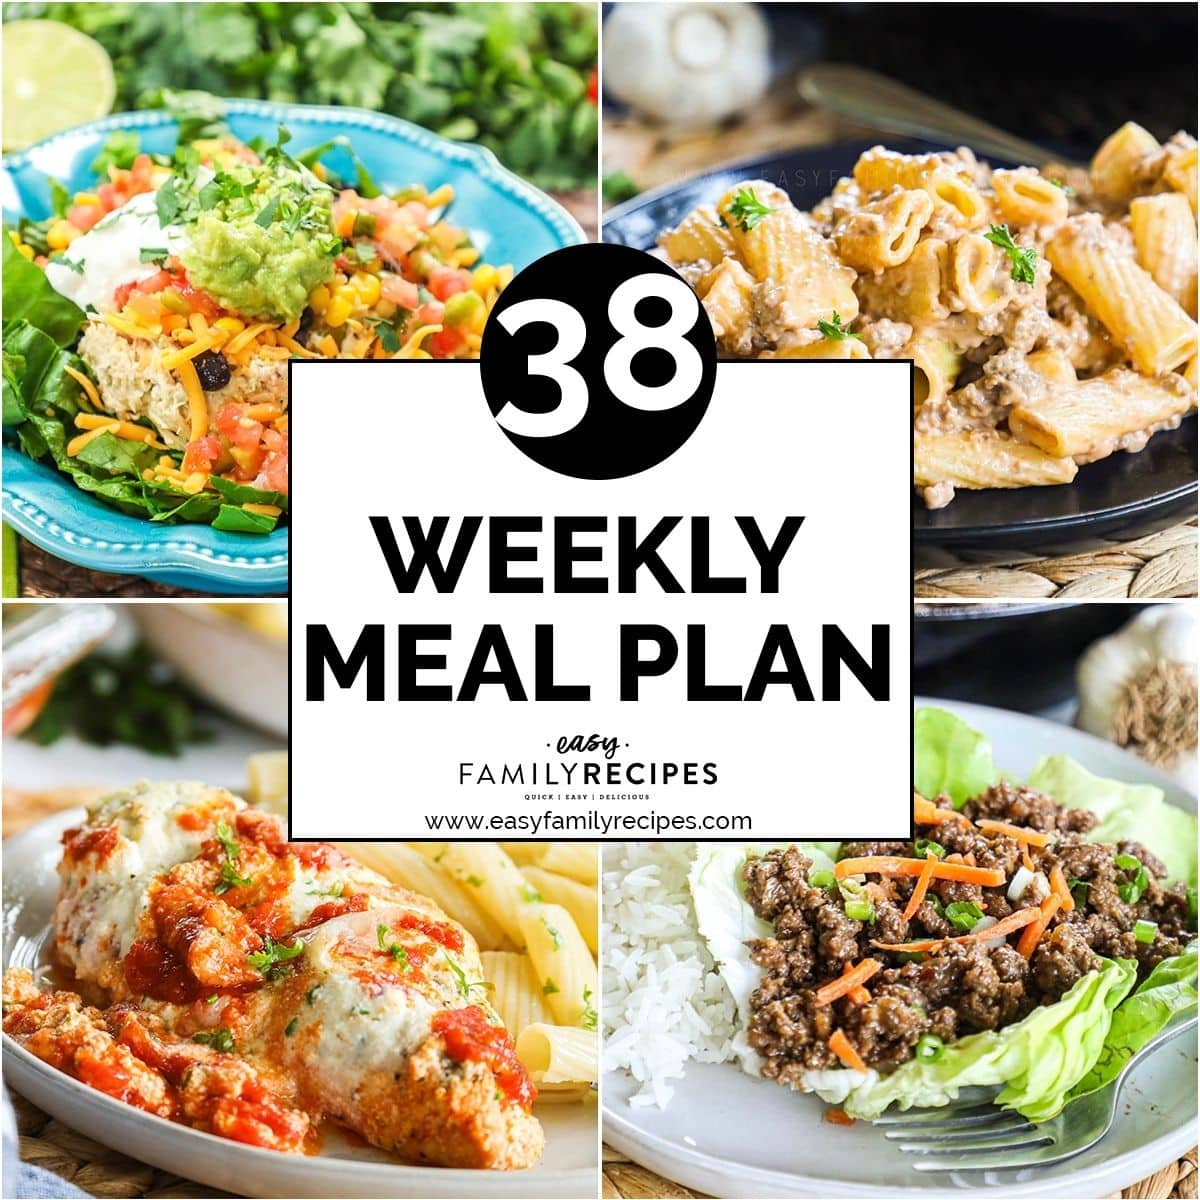 Weekly Meal Plan 38